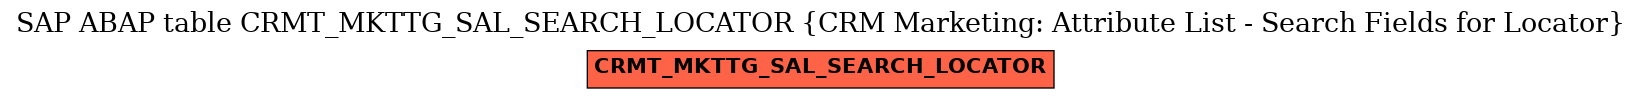 E-R Diagram for table CRMT_MKTTG_SAL_SEARCH_LOCATOR (CRM Marketing: Attribute List - Search Fields for Locator)